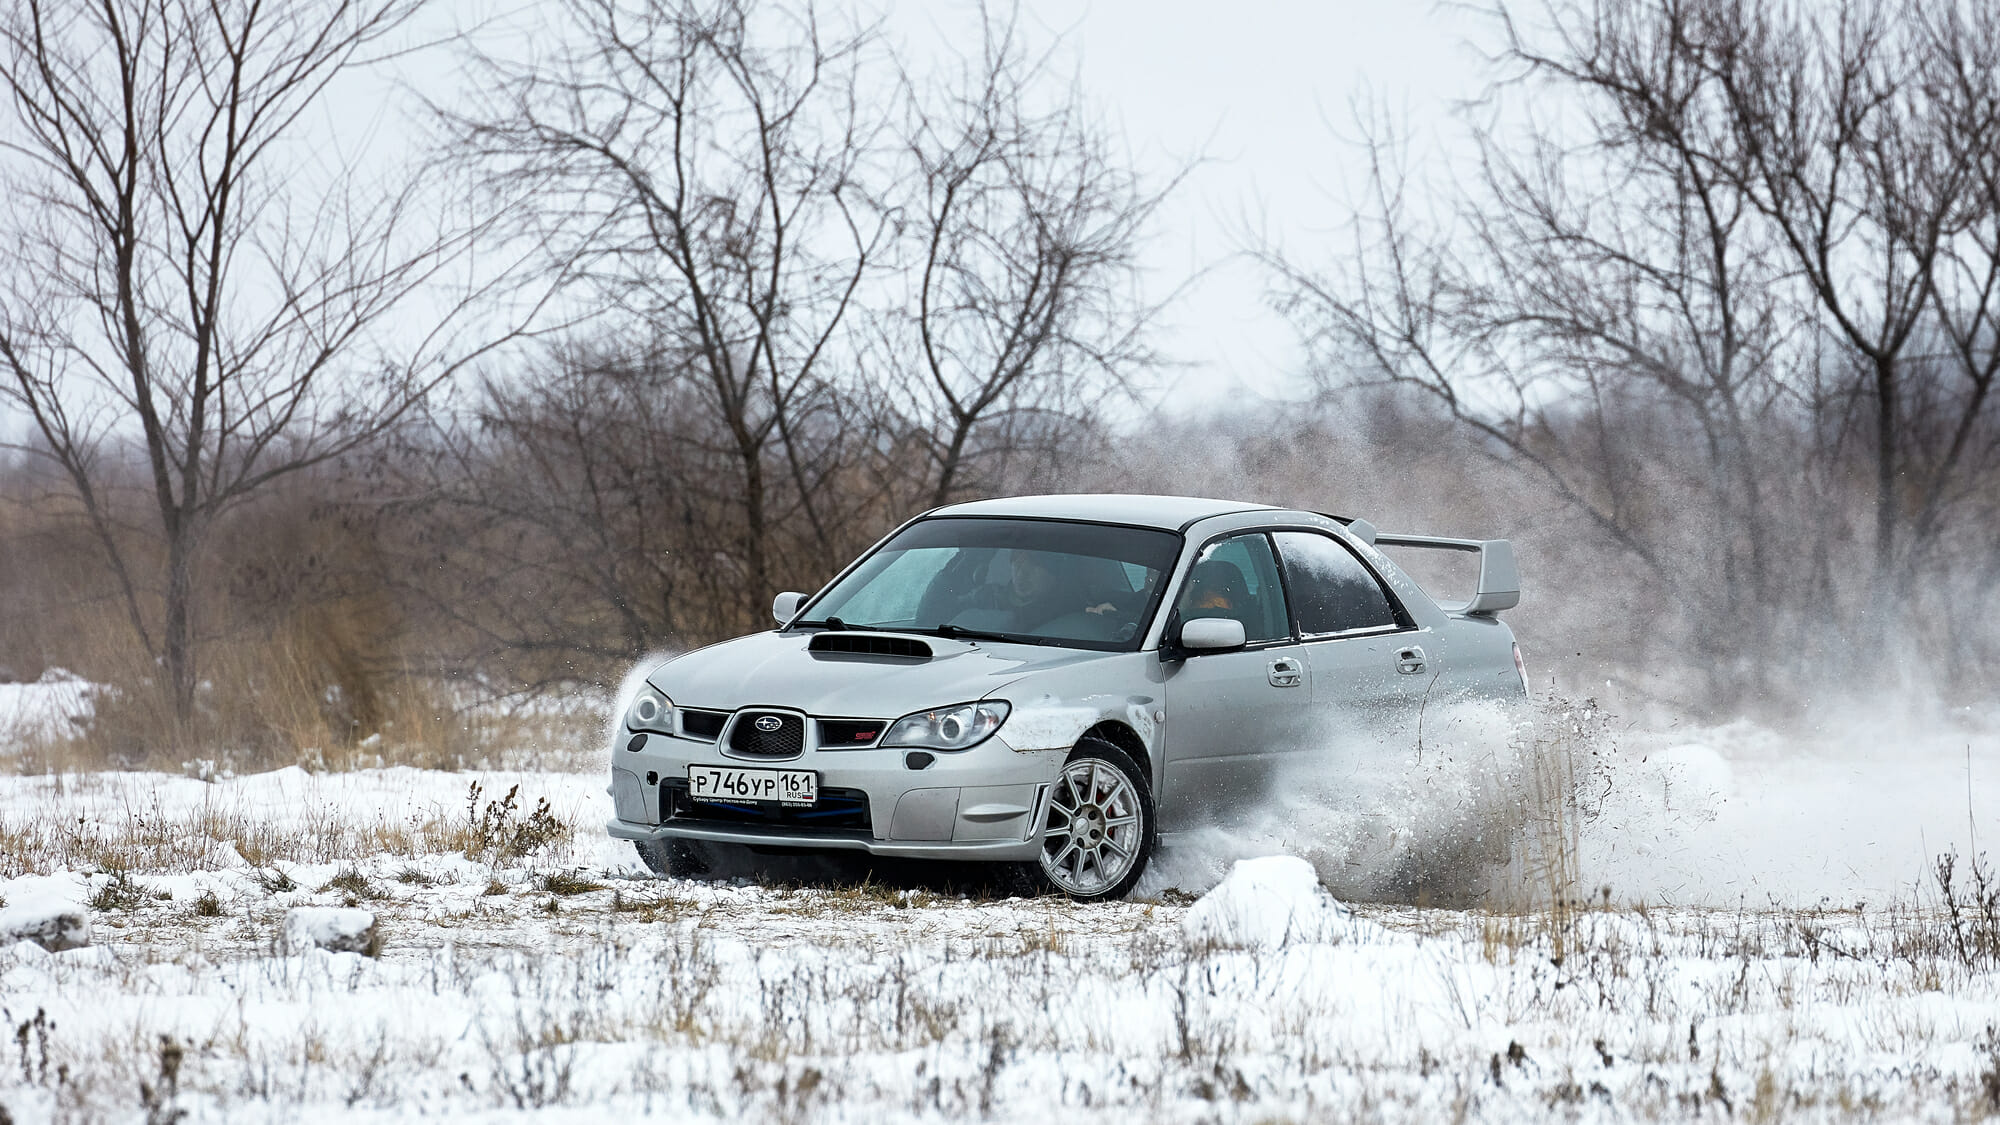 Subaru WRX Drifting in snow